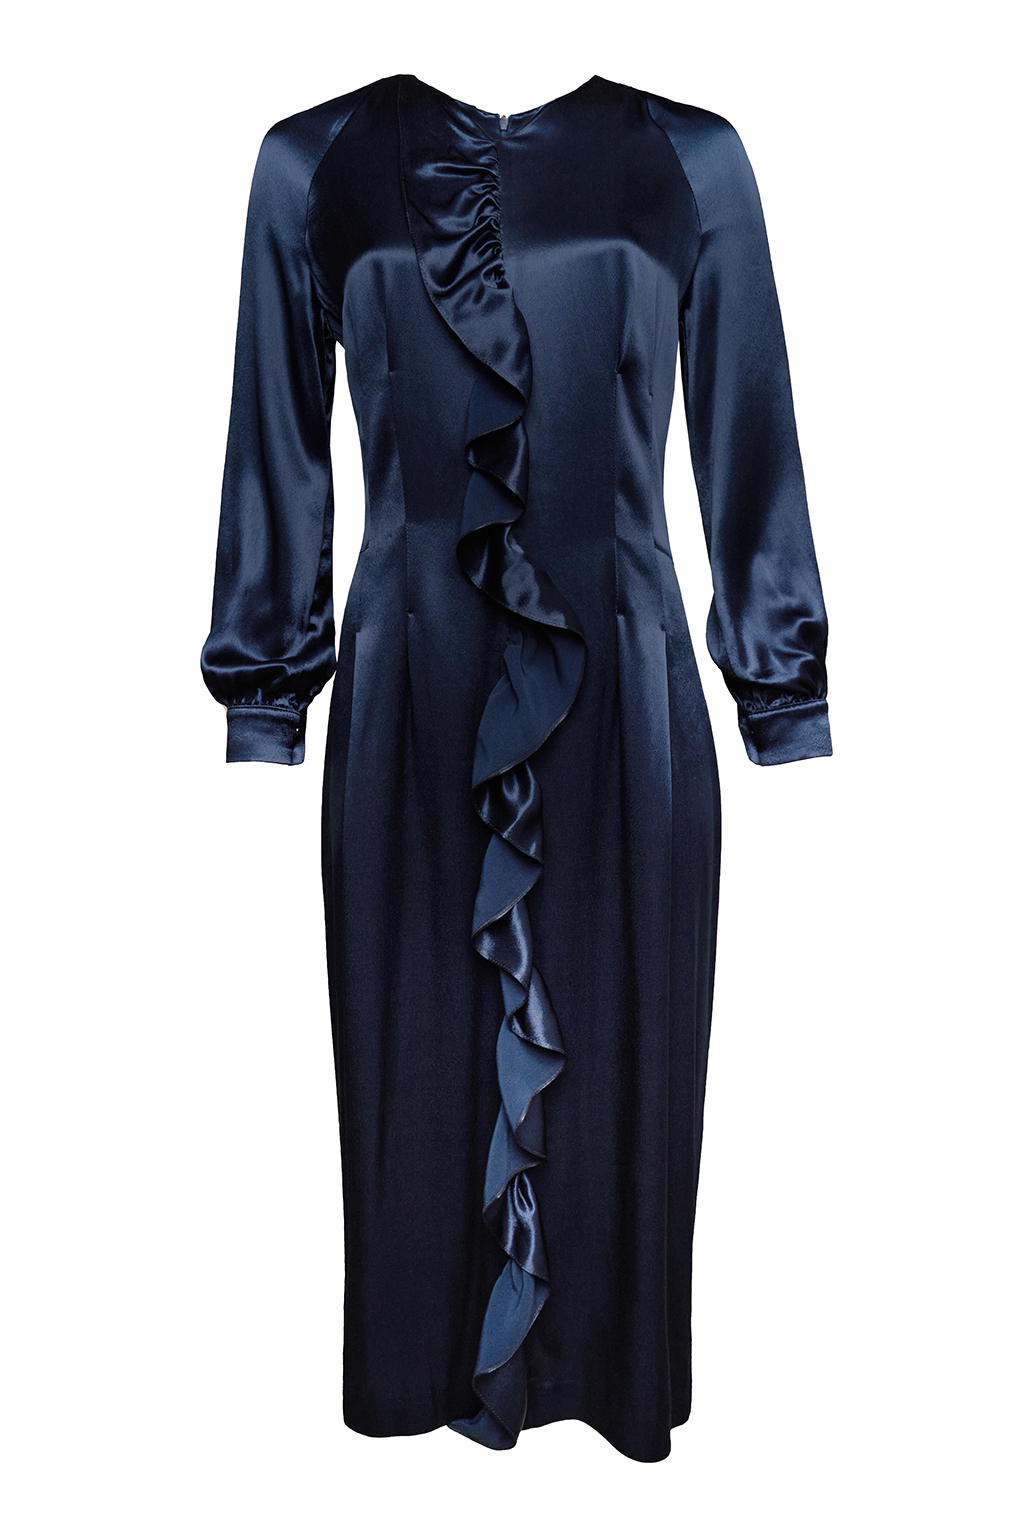 Платье женское PAOLA RAY PR120-3068 синее XL